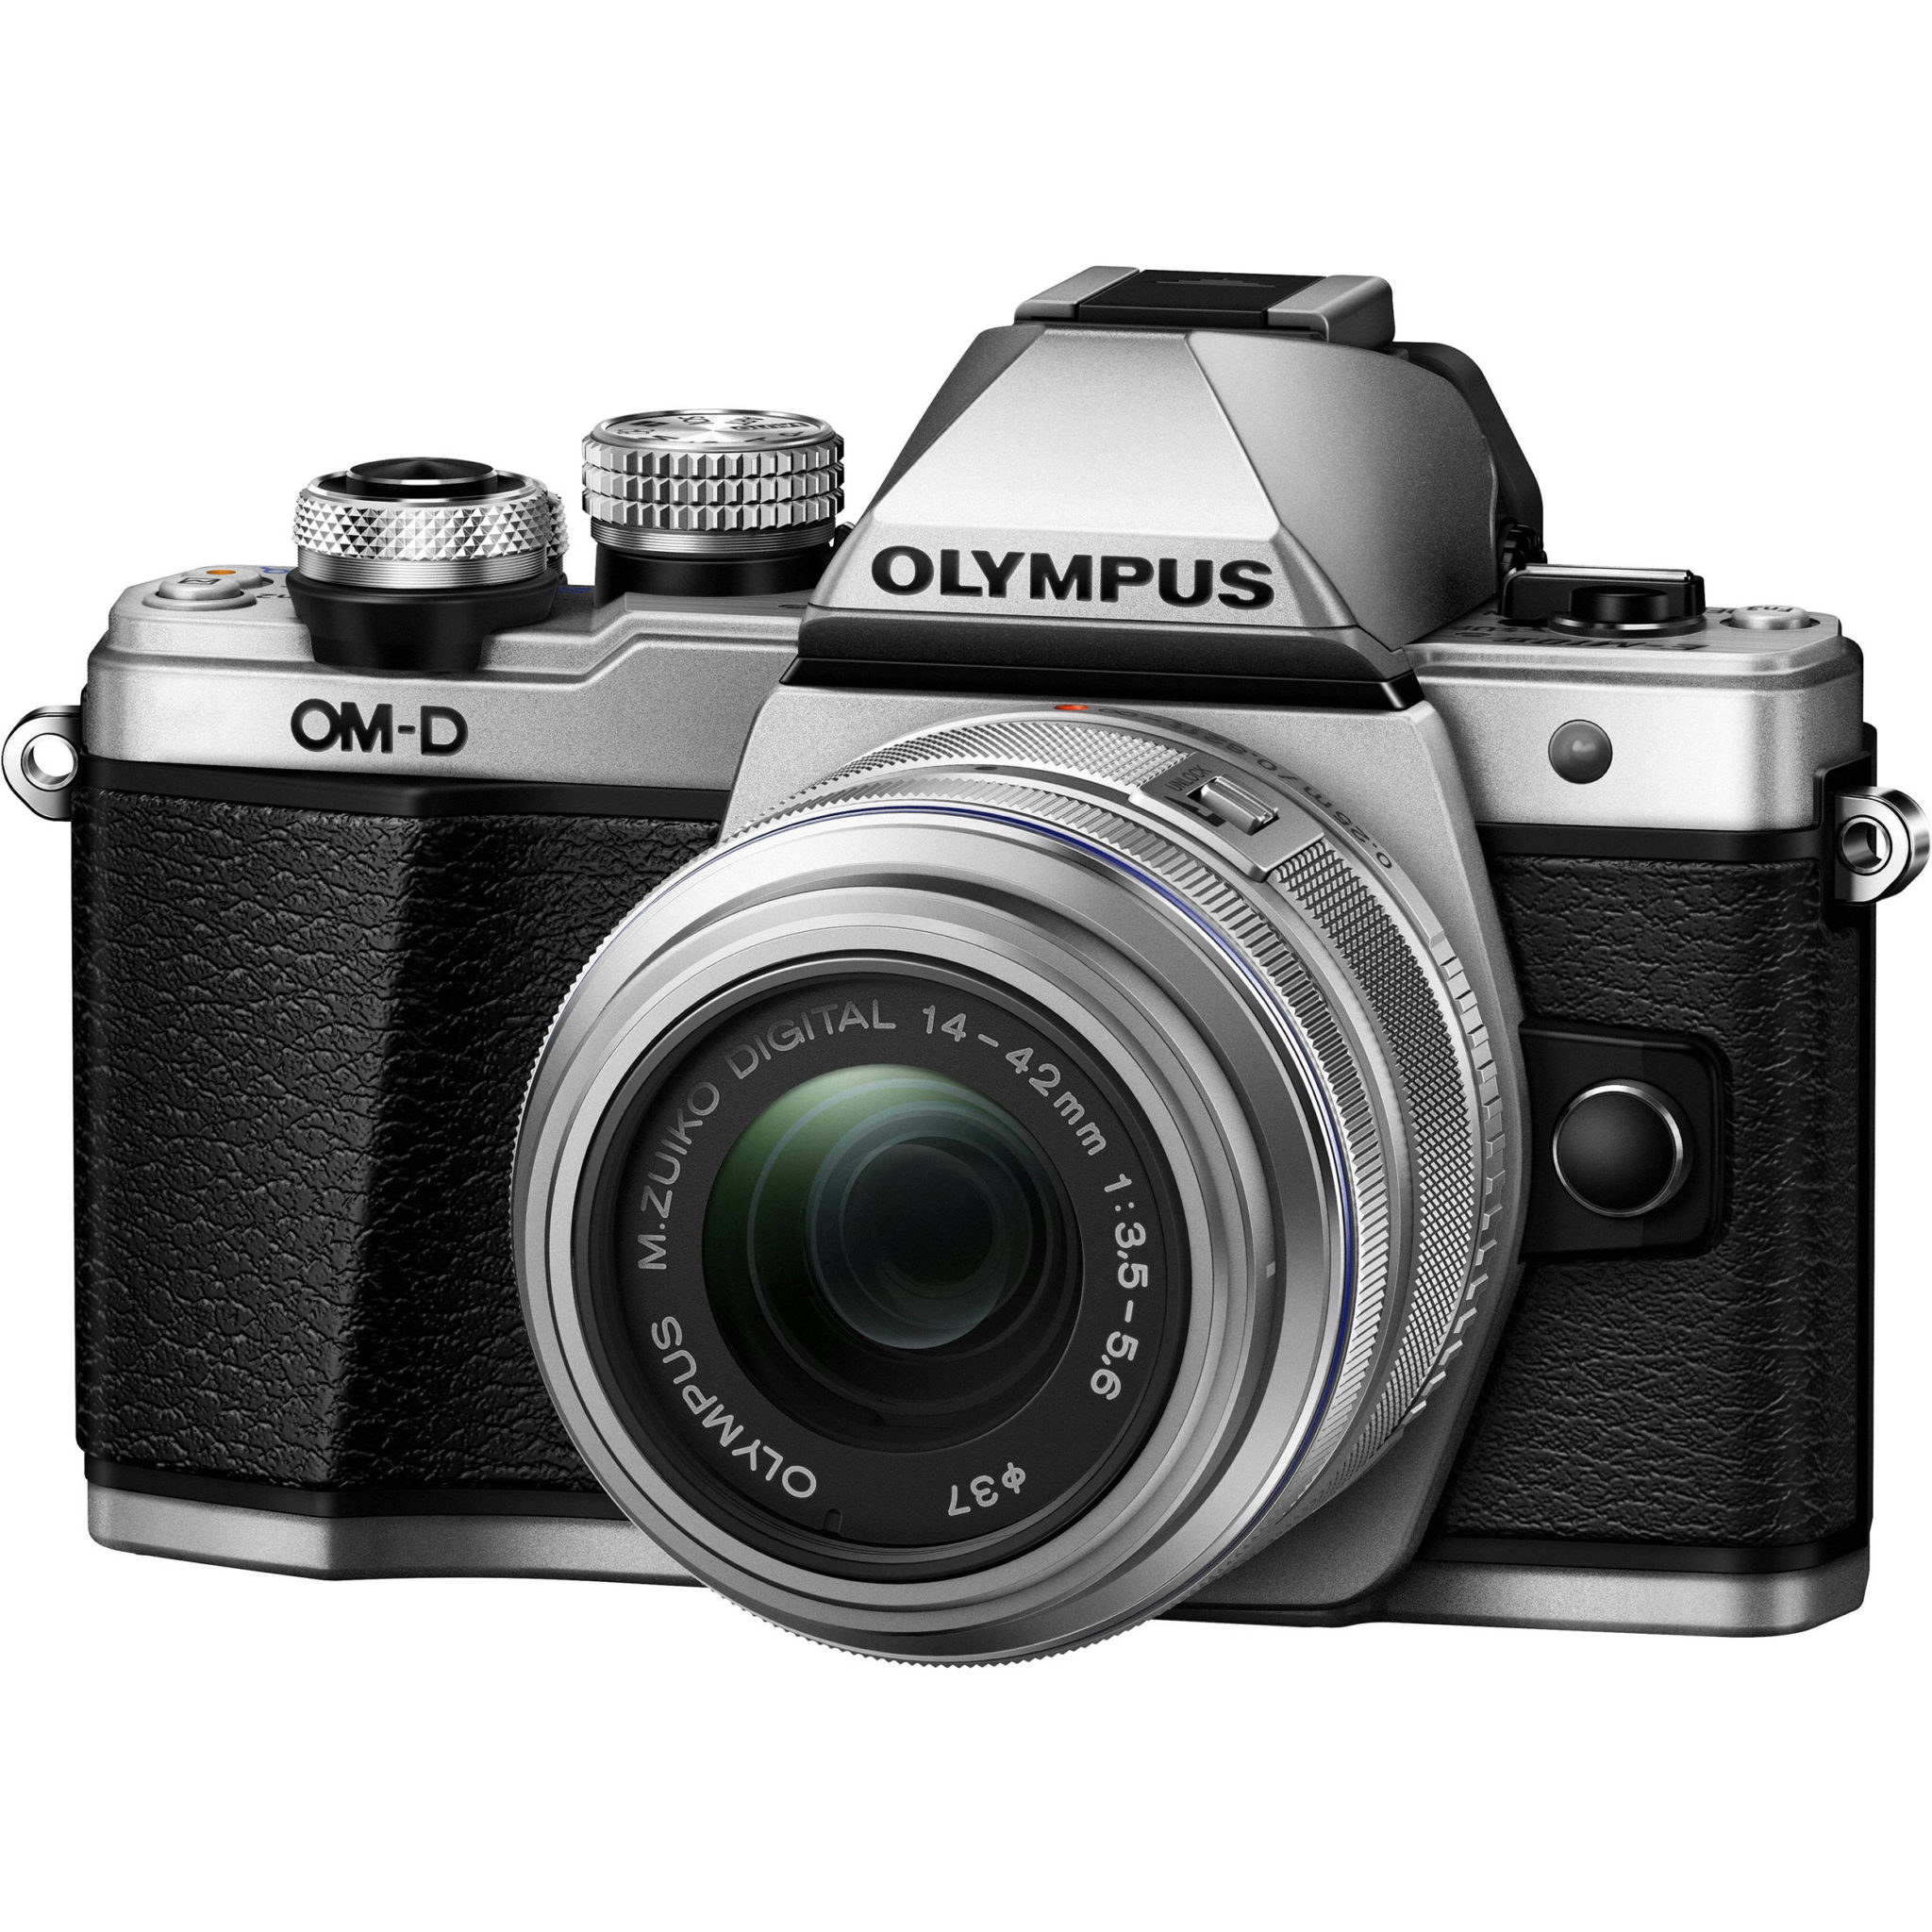 aparat bezlusterkowy Olympus OM-D E-M10 Mark II obraz